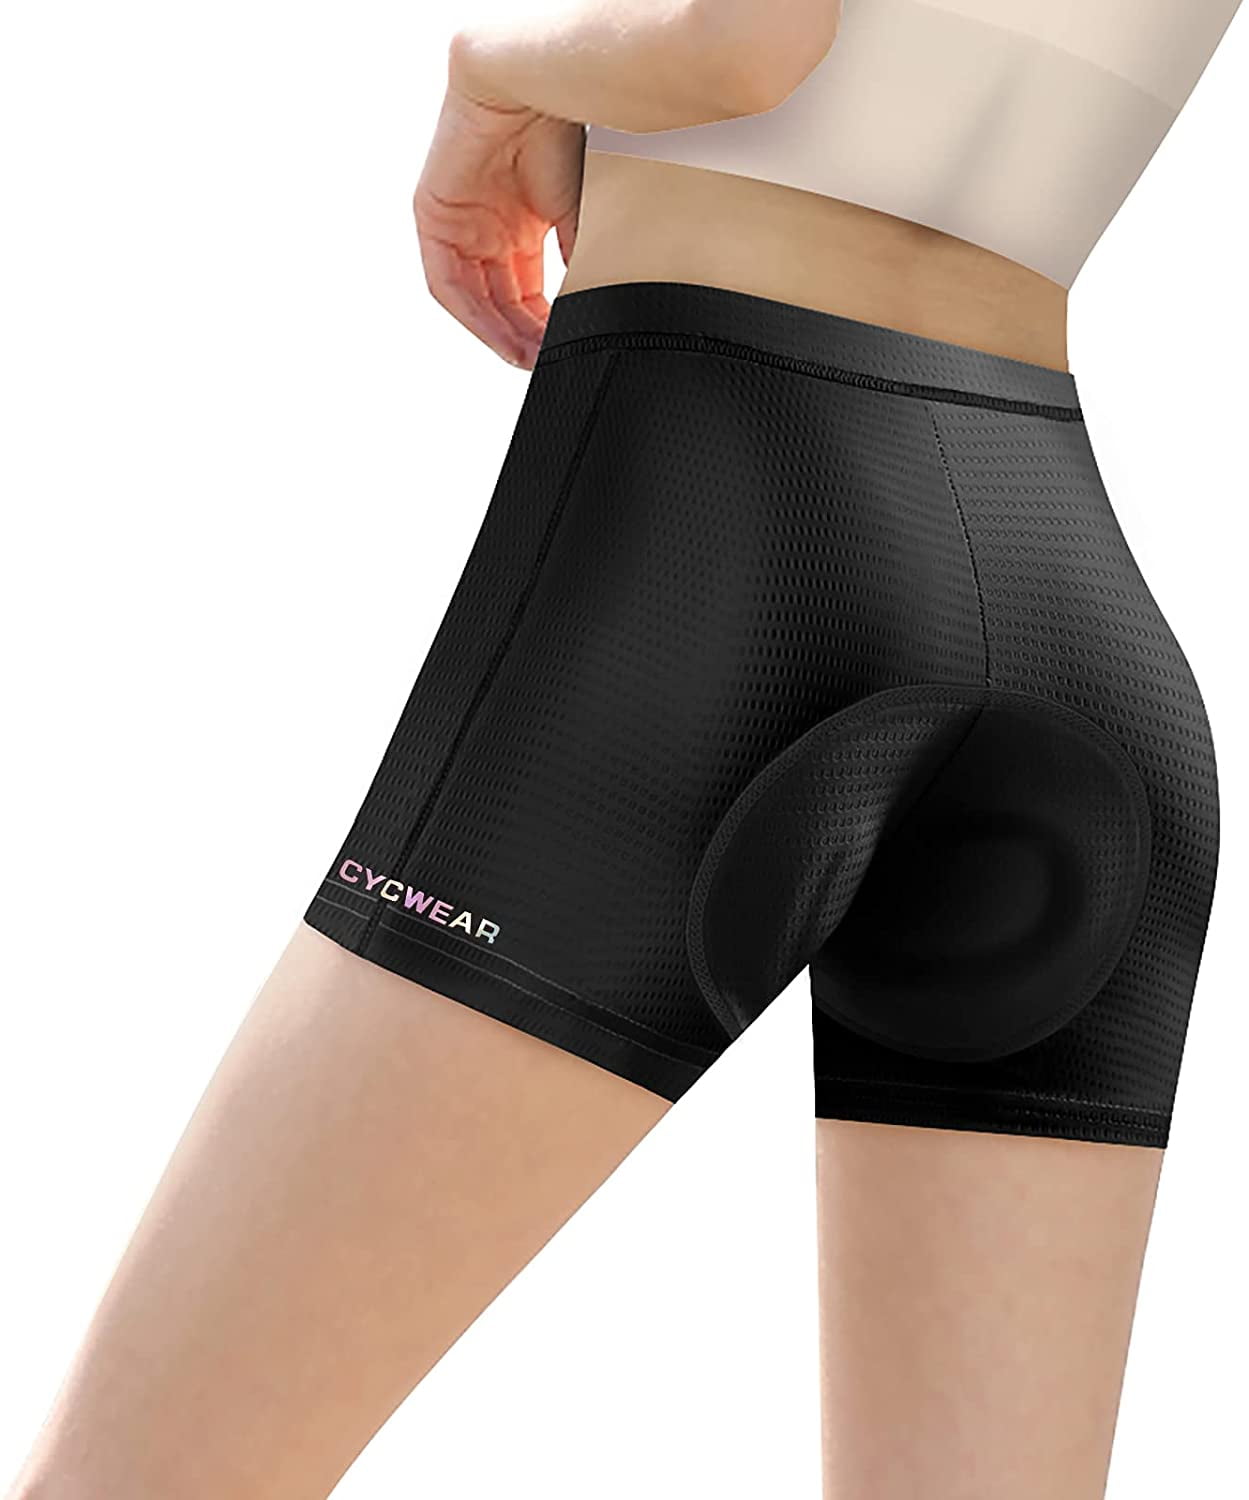 Women's 3D Gel Padded Cycling Underwear Bicycle MTB Bike Shorts S-XL 